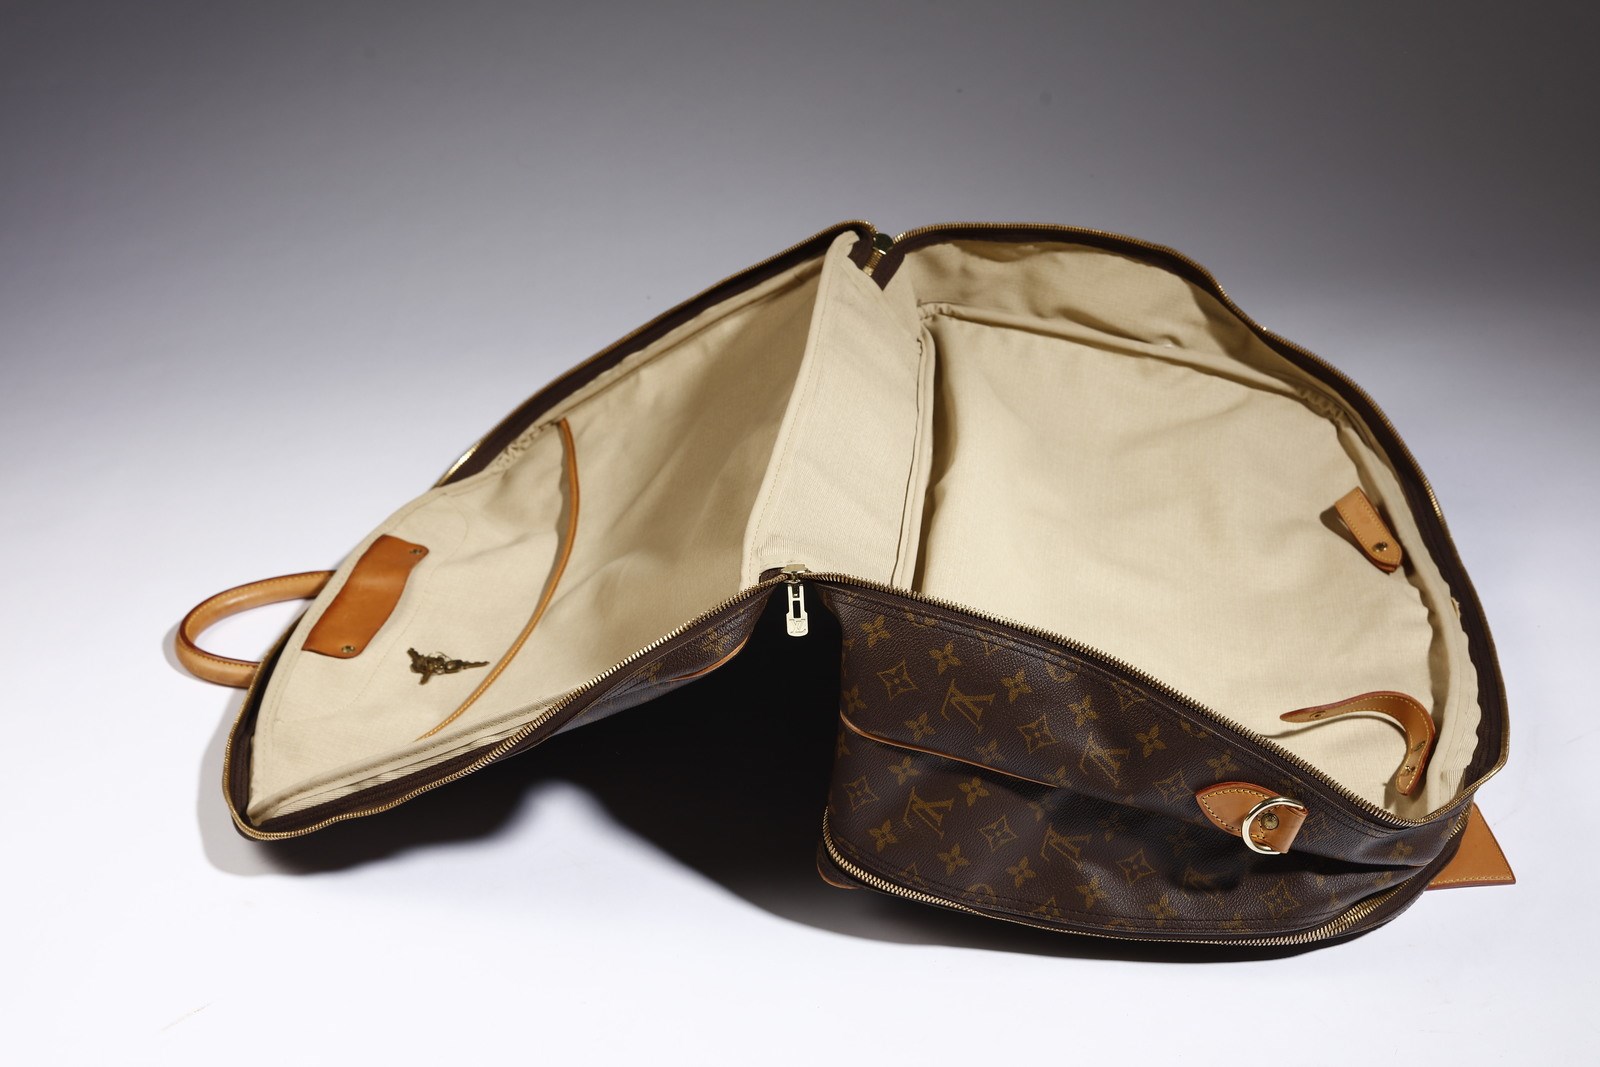 Sold at Auction: Louis Vuitton Evasion Monogram Travel Bag